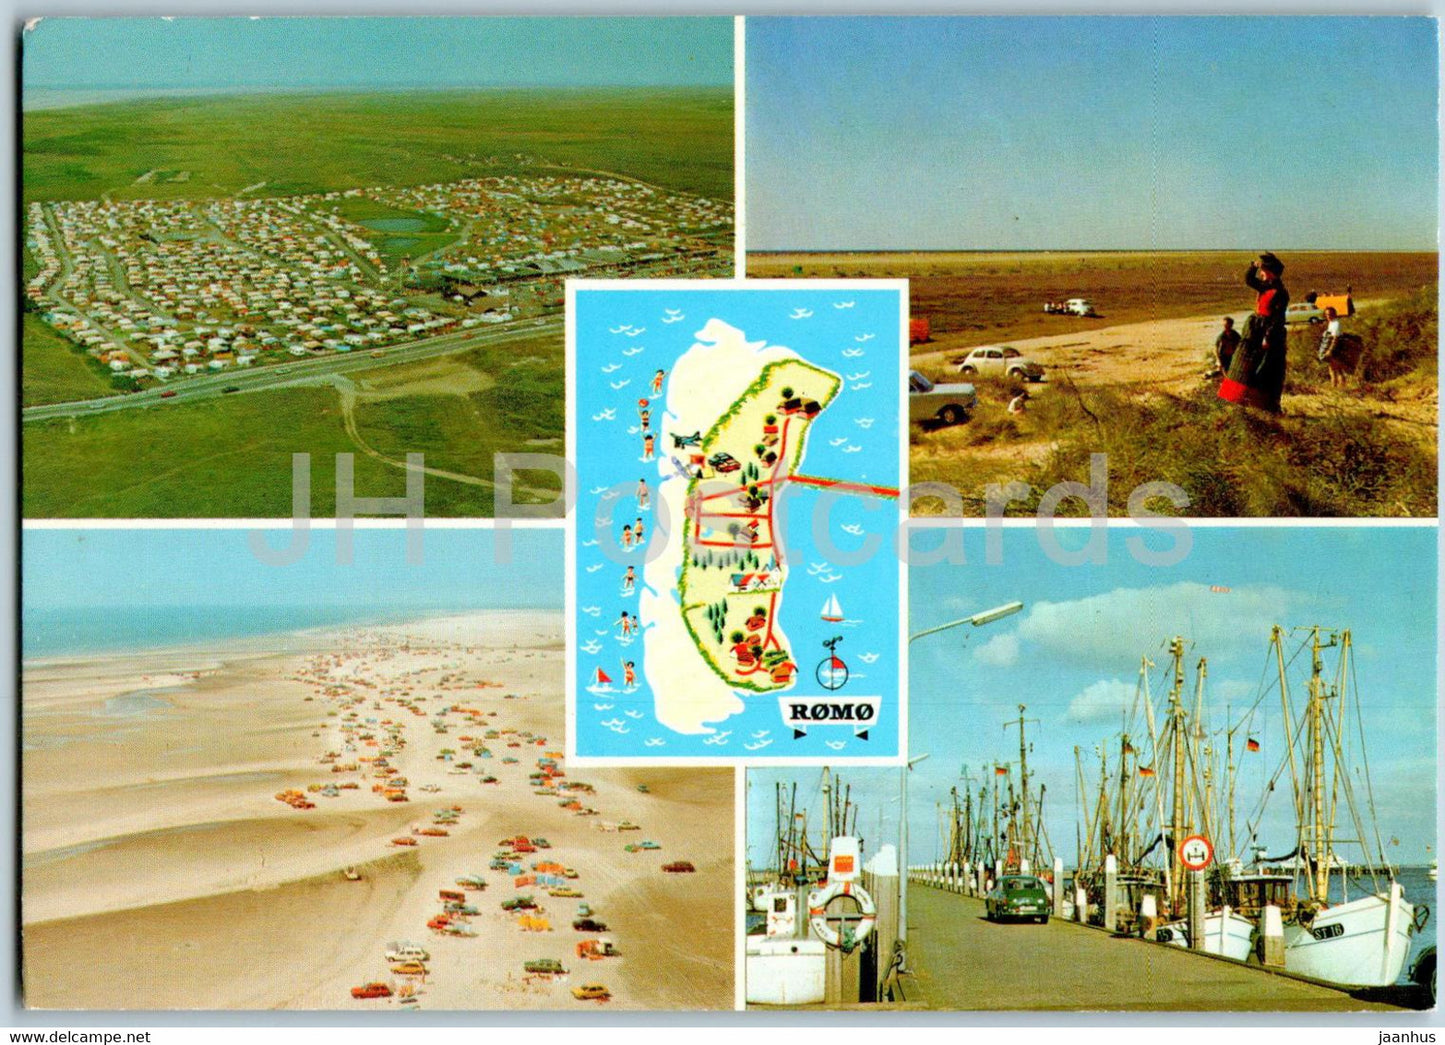 Romo - map - multiview - ship - boat - 1986 - Denmark - used - JH Postcards